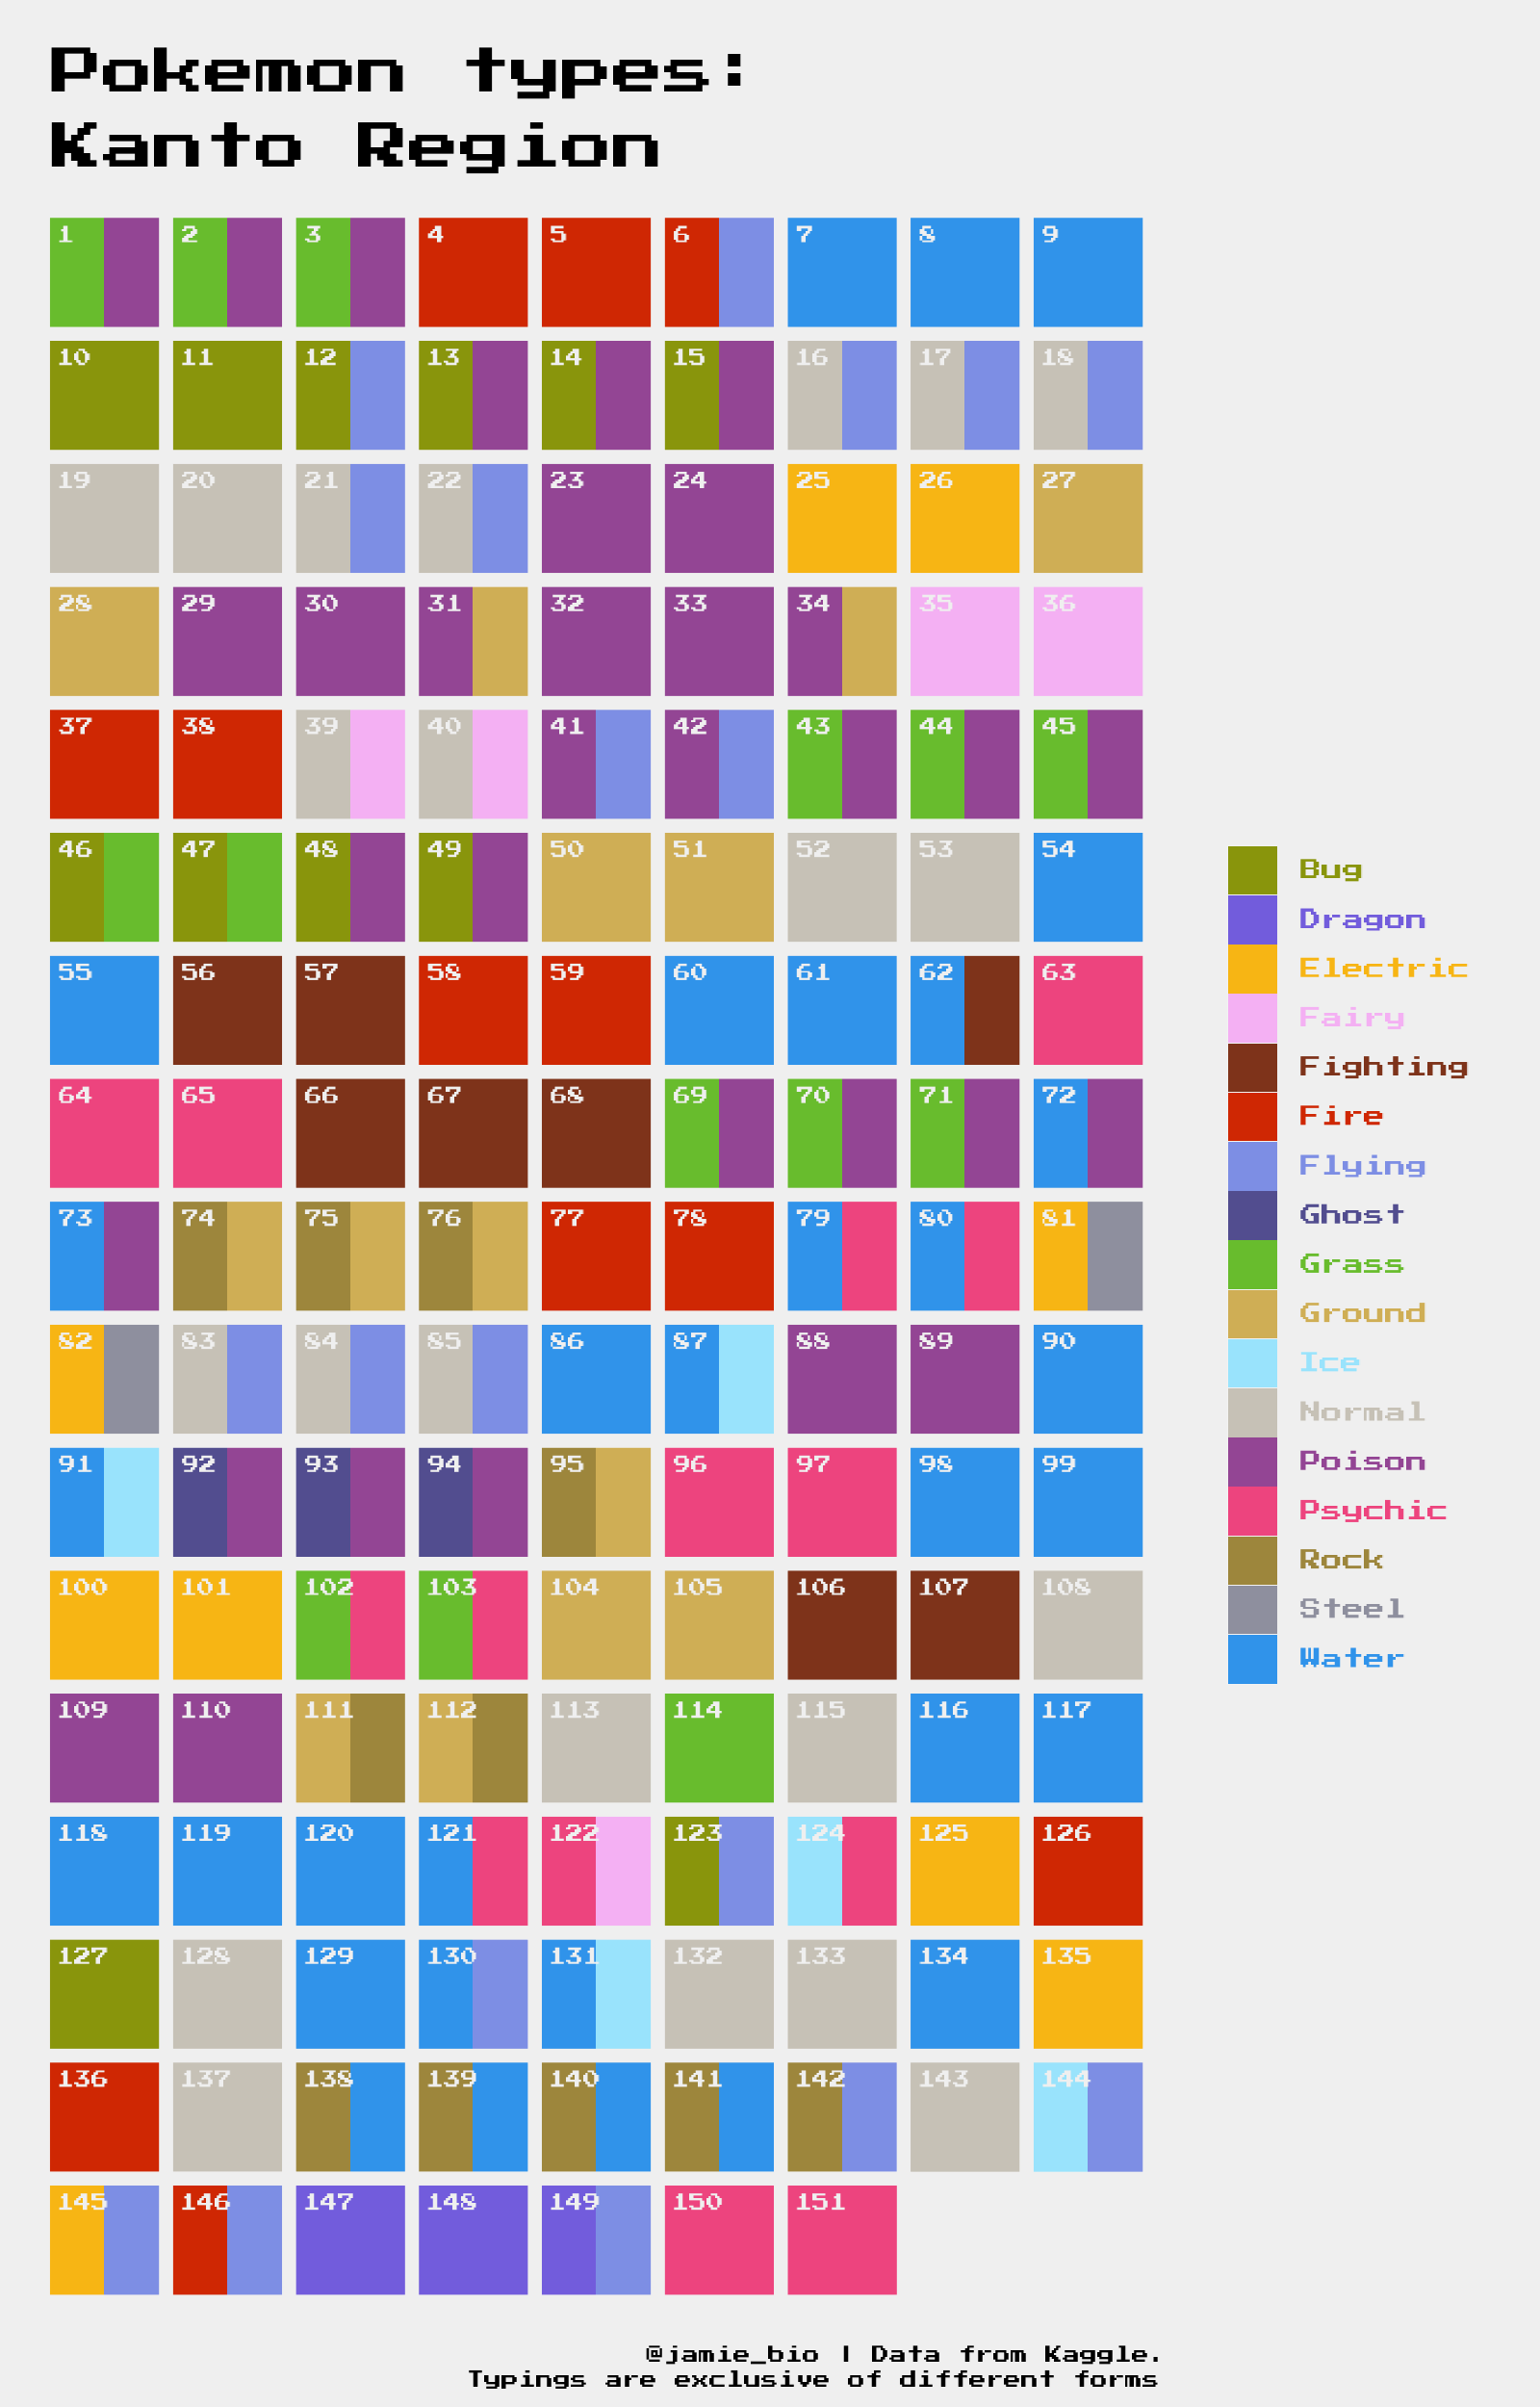 Pokemon Type Chart - Imgur